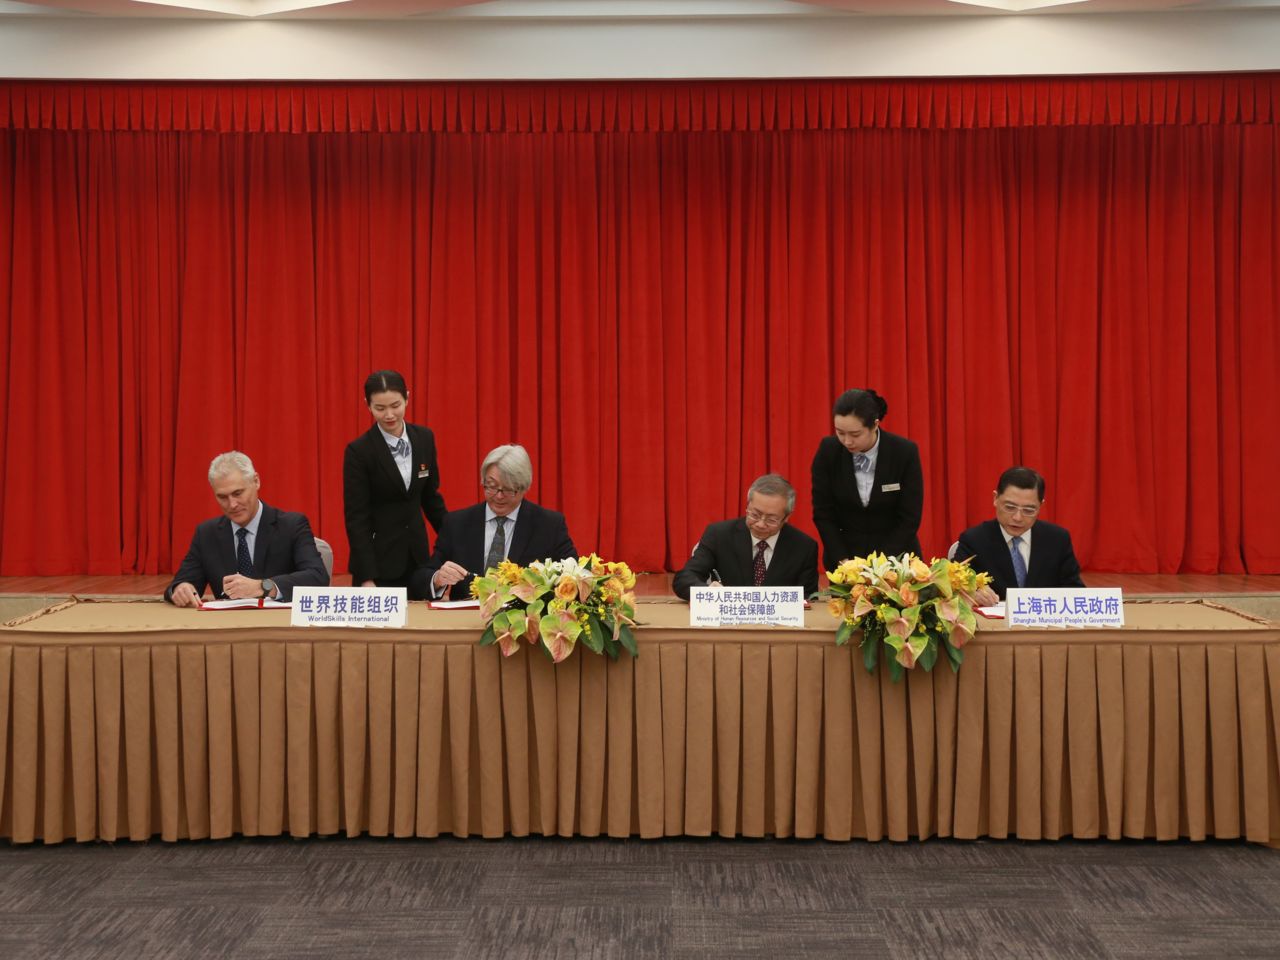 Signing ceremony marks the formal start of planning for WorldSkills Shanghai 2021